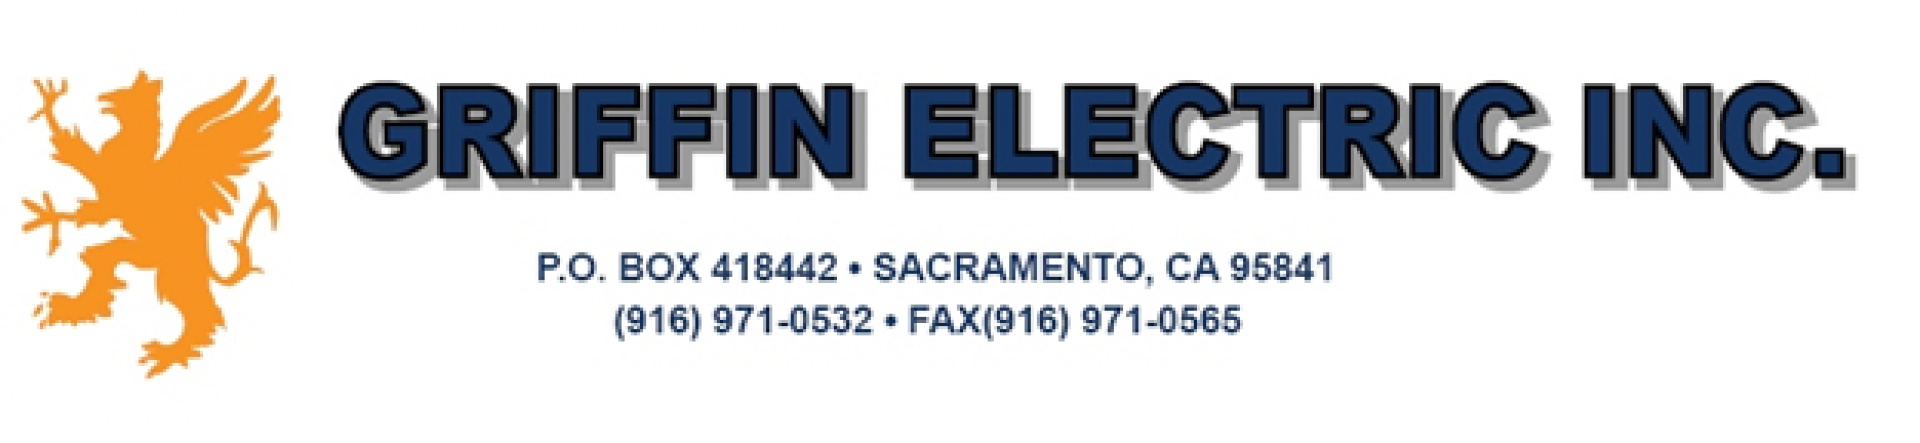 Griffin Electric Inc. logo